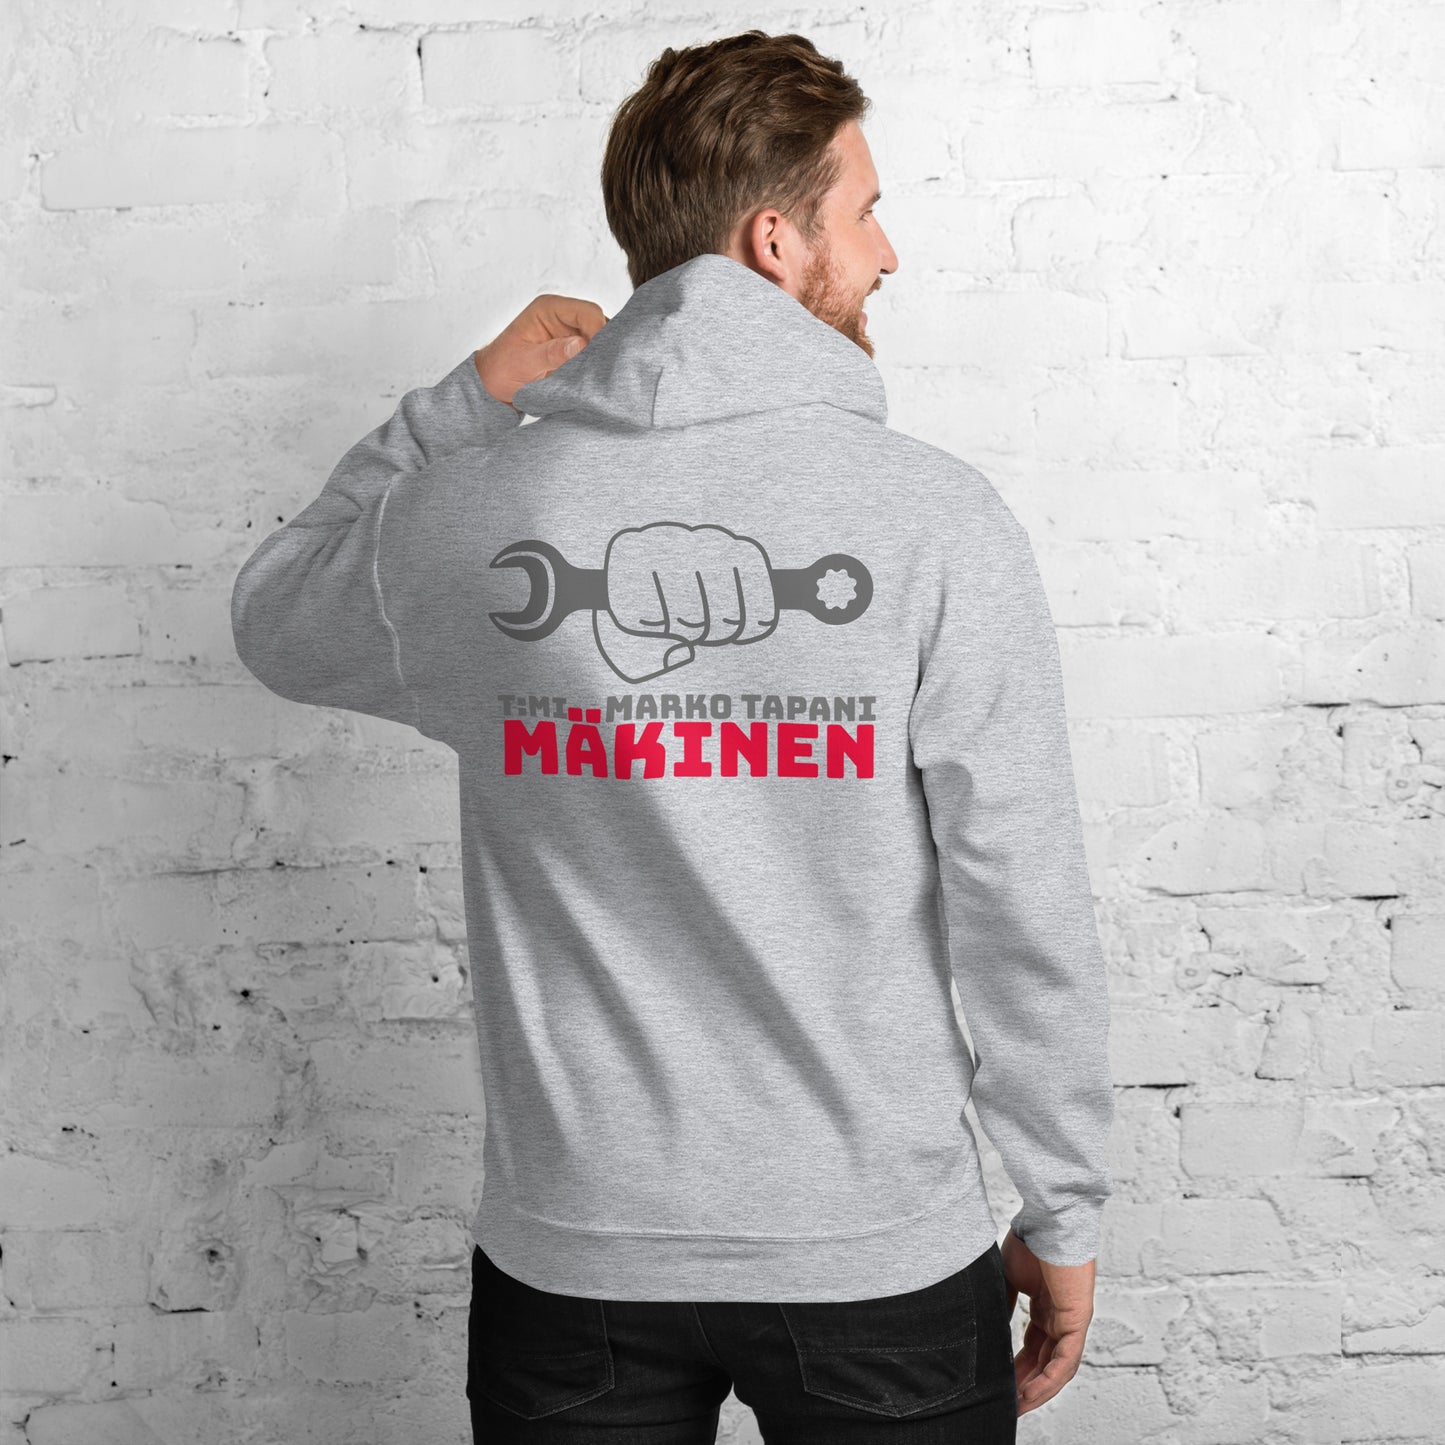 "T:mi Marko Tapani Mäkinen" hoodie